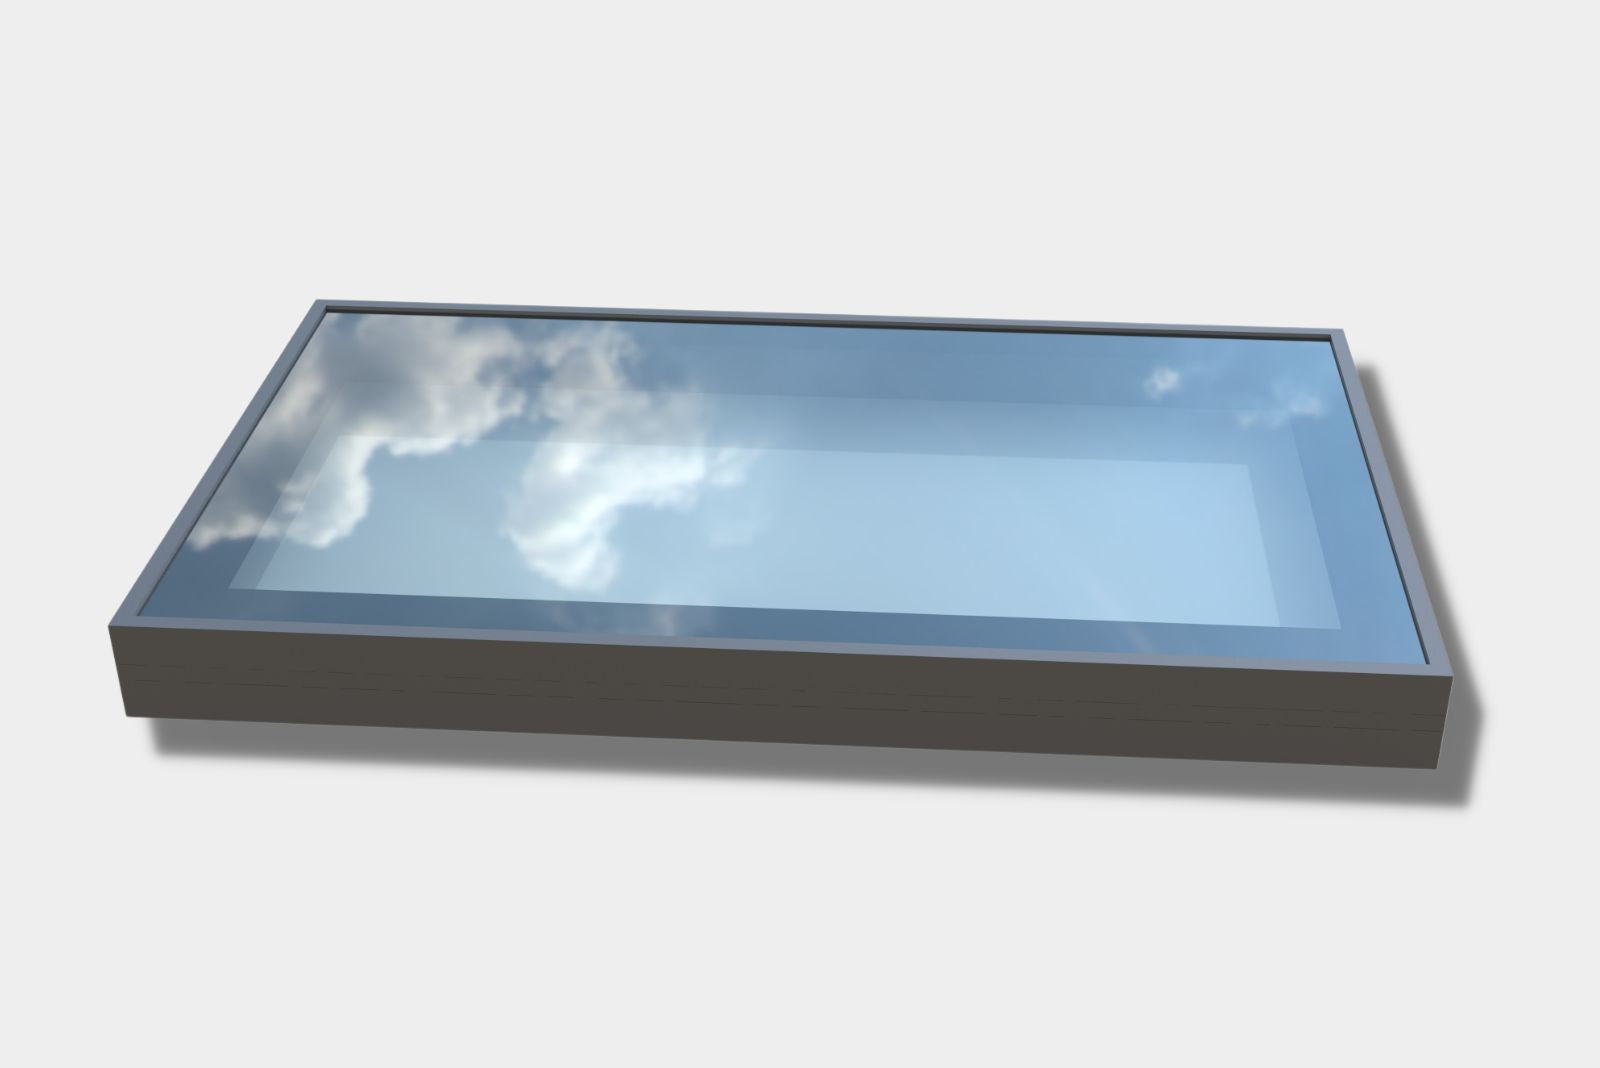 Framed Skylight 1000 x 1000 mm – Double glazed